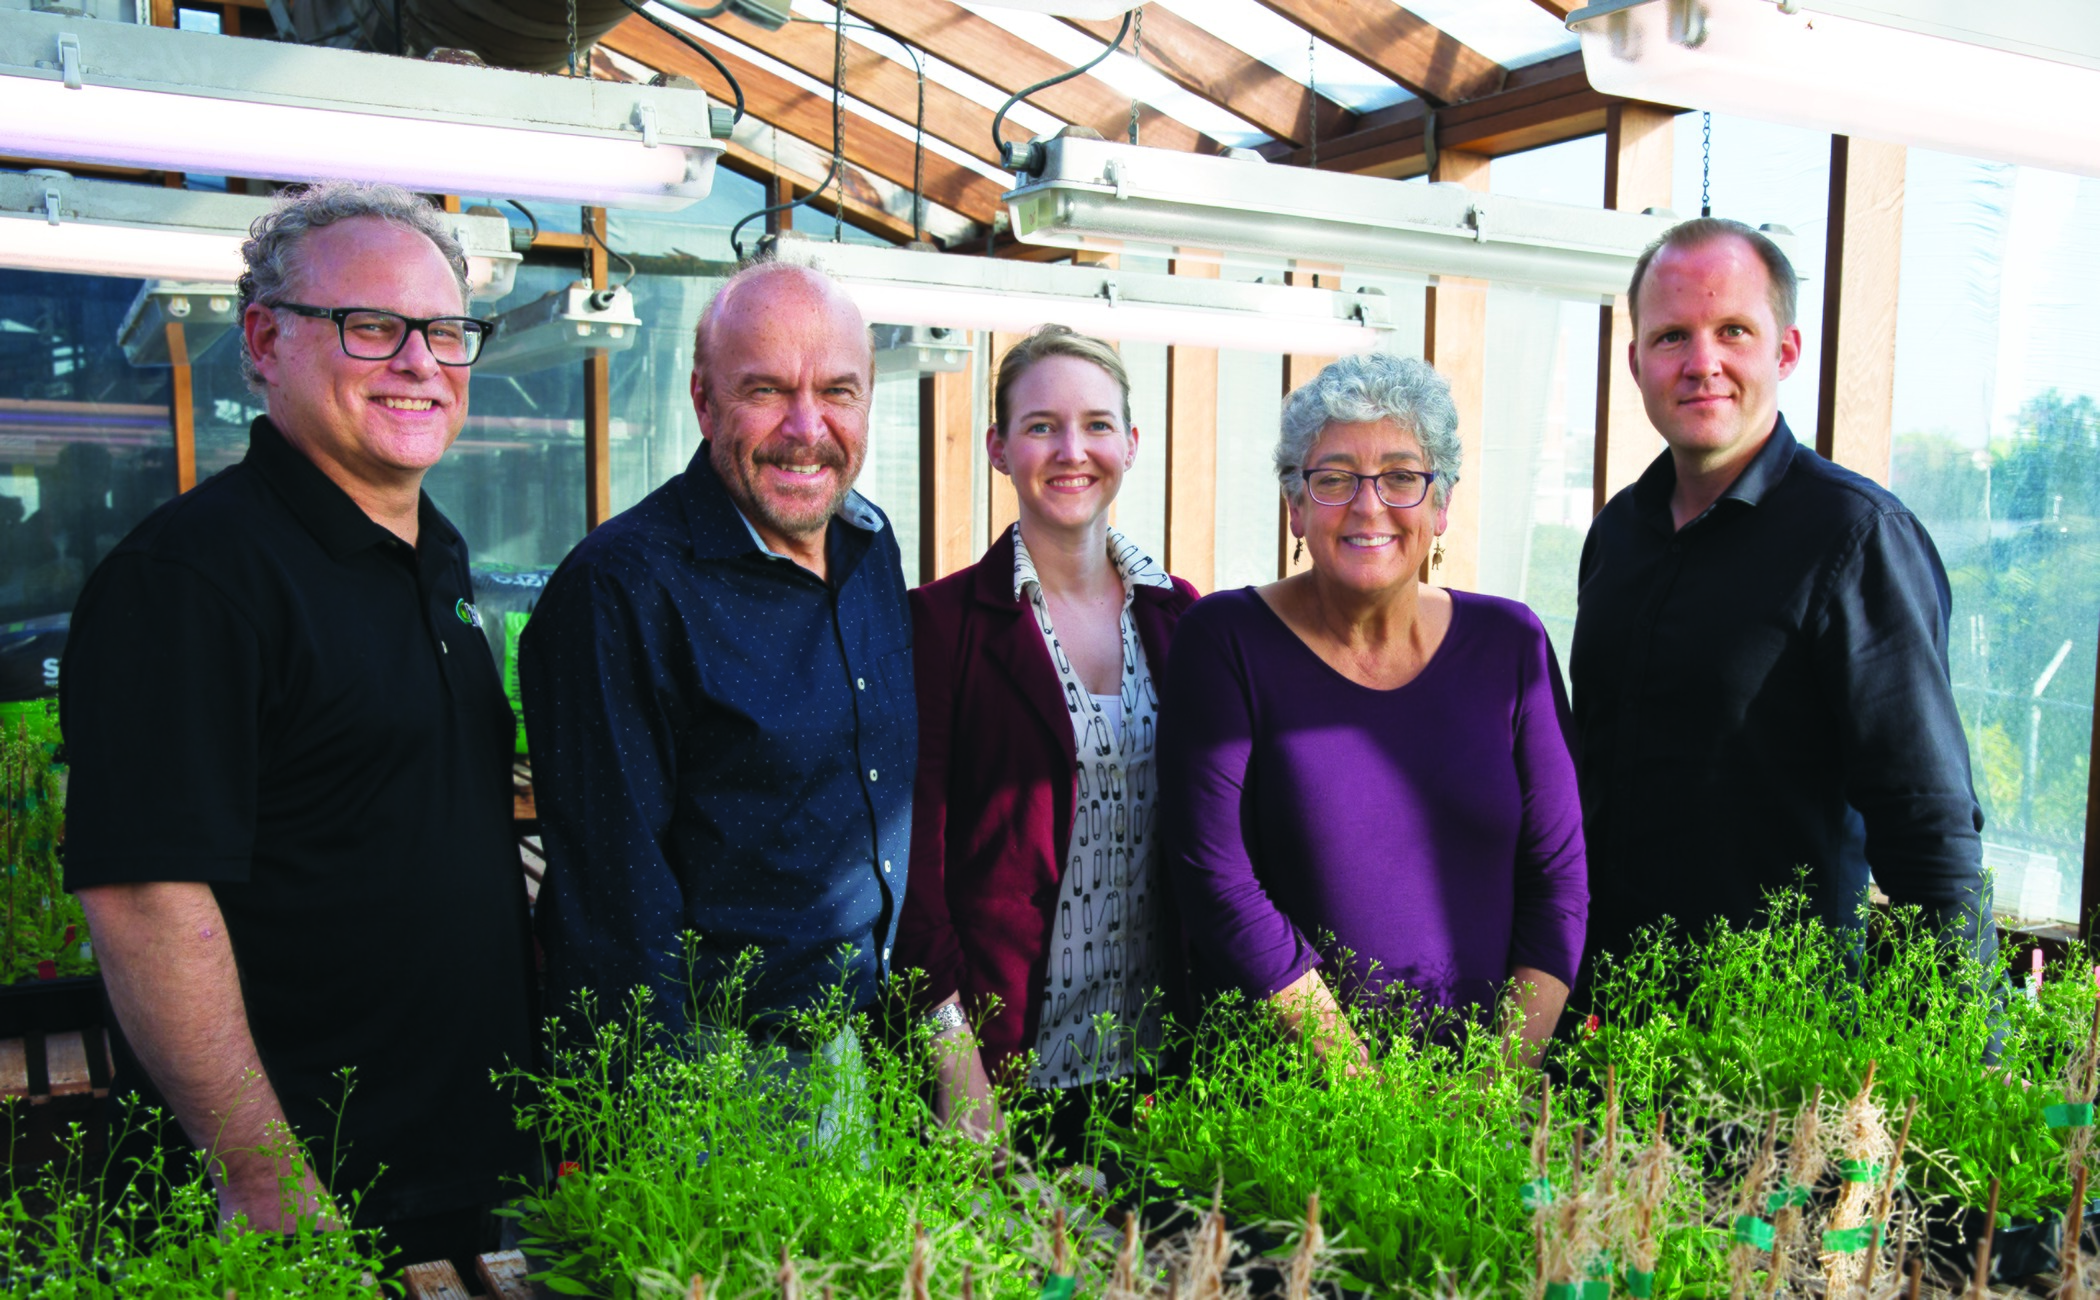 Pictured: The Salk Institute plant biology team. From left: Professor Joseph Noel, Professor Joseph Ecker, Associate Professor Julie Law, Professor Joanne Chory, Associate Professor Wolfgang Busch.